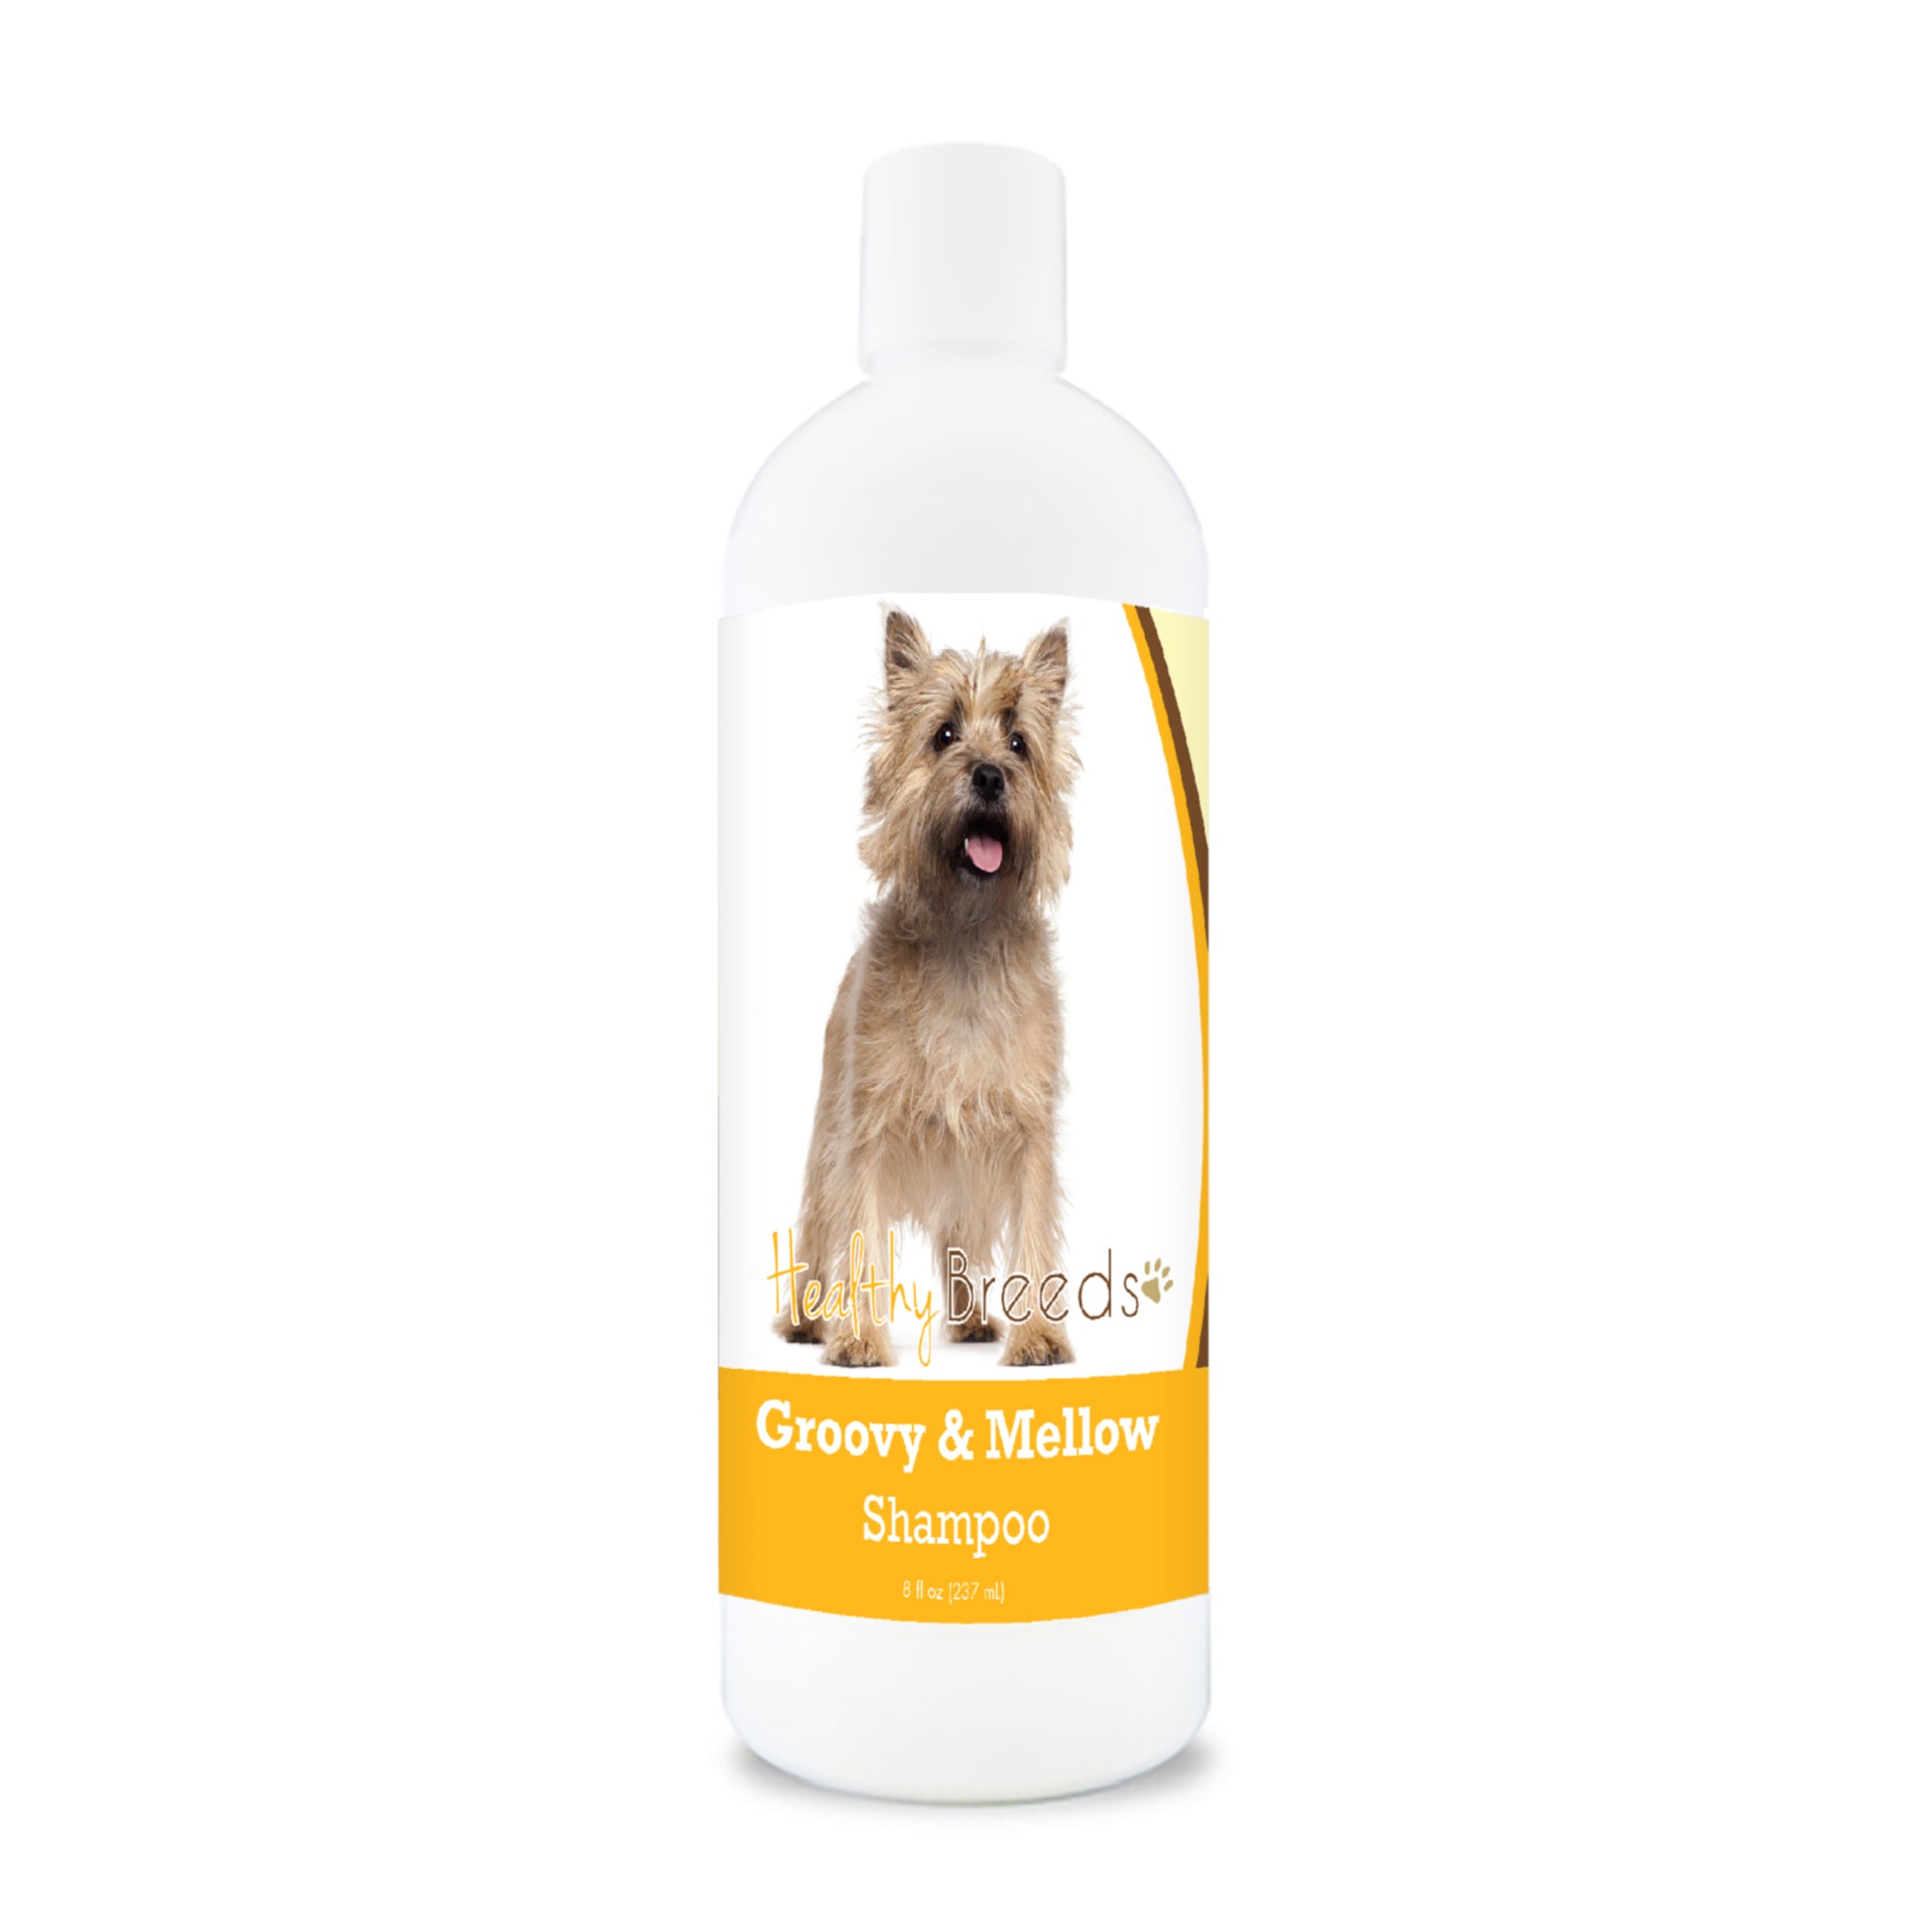 Cairn Terrier Groovy & Mellow Shampoo 8 oz